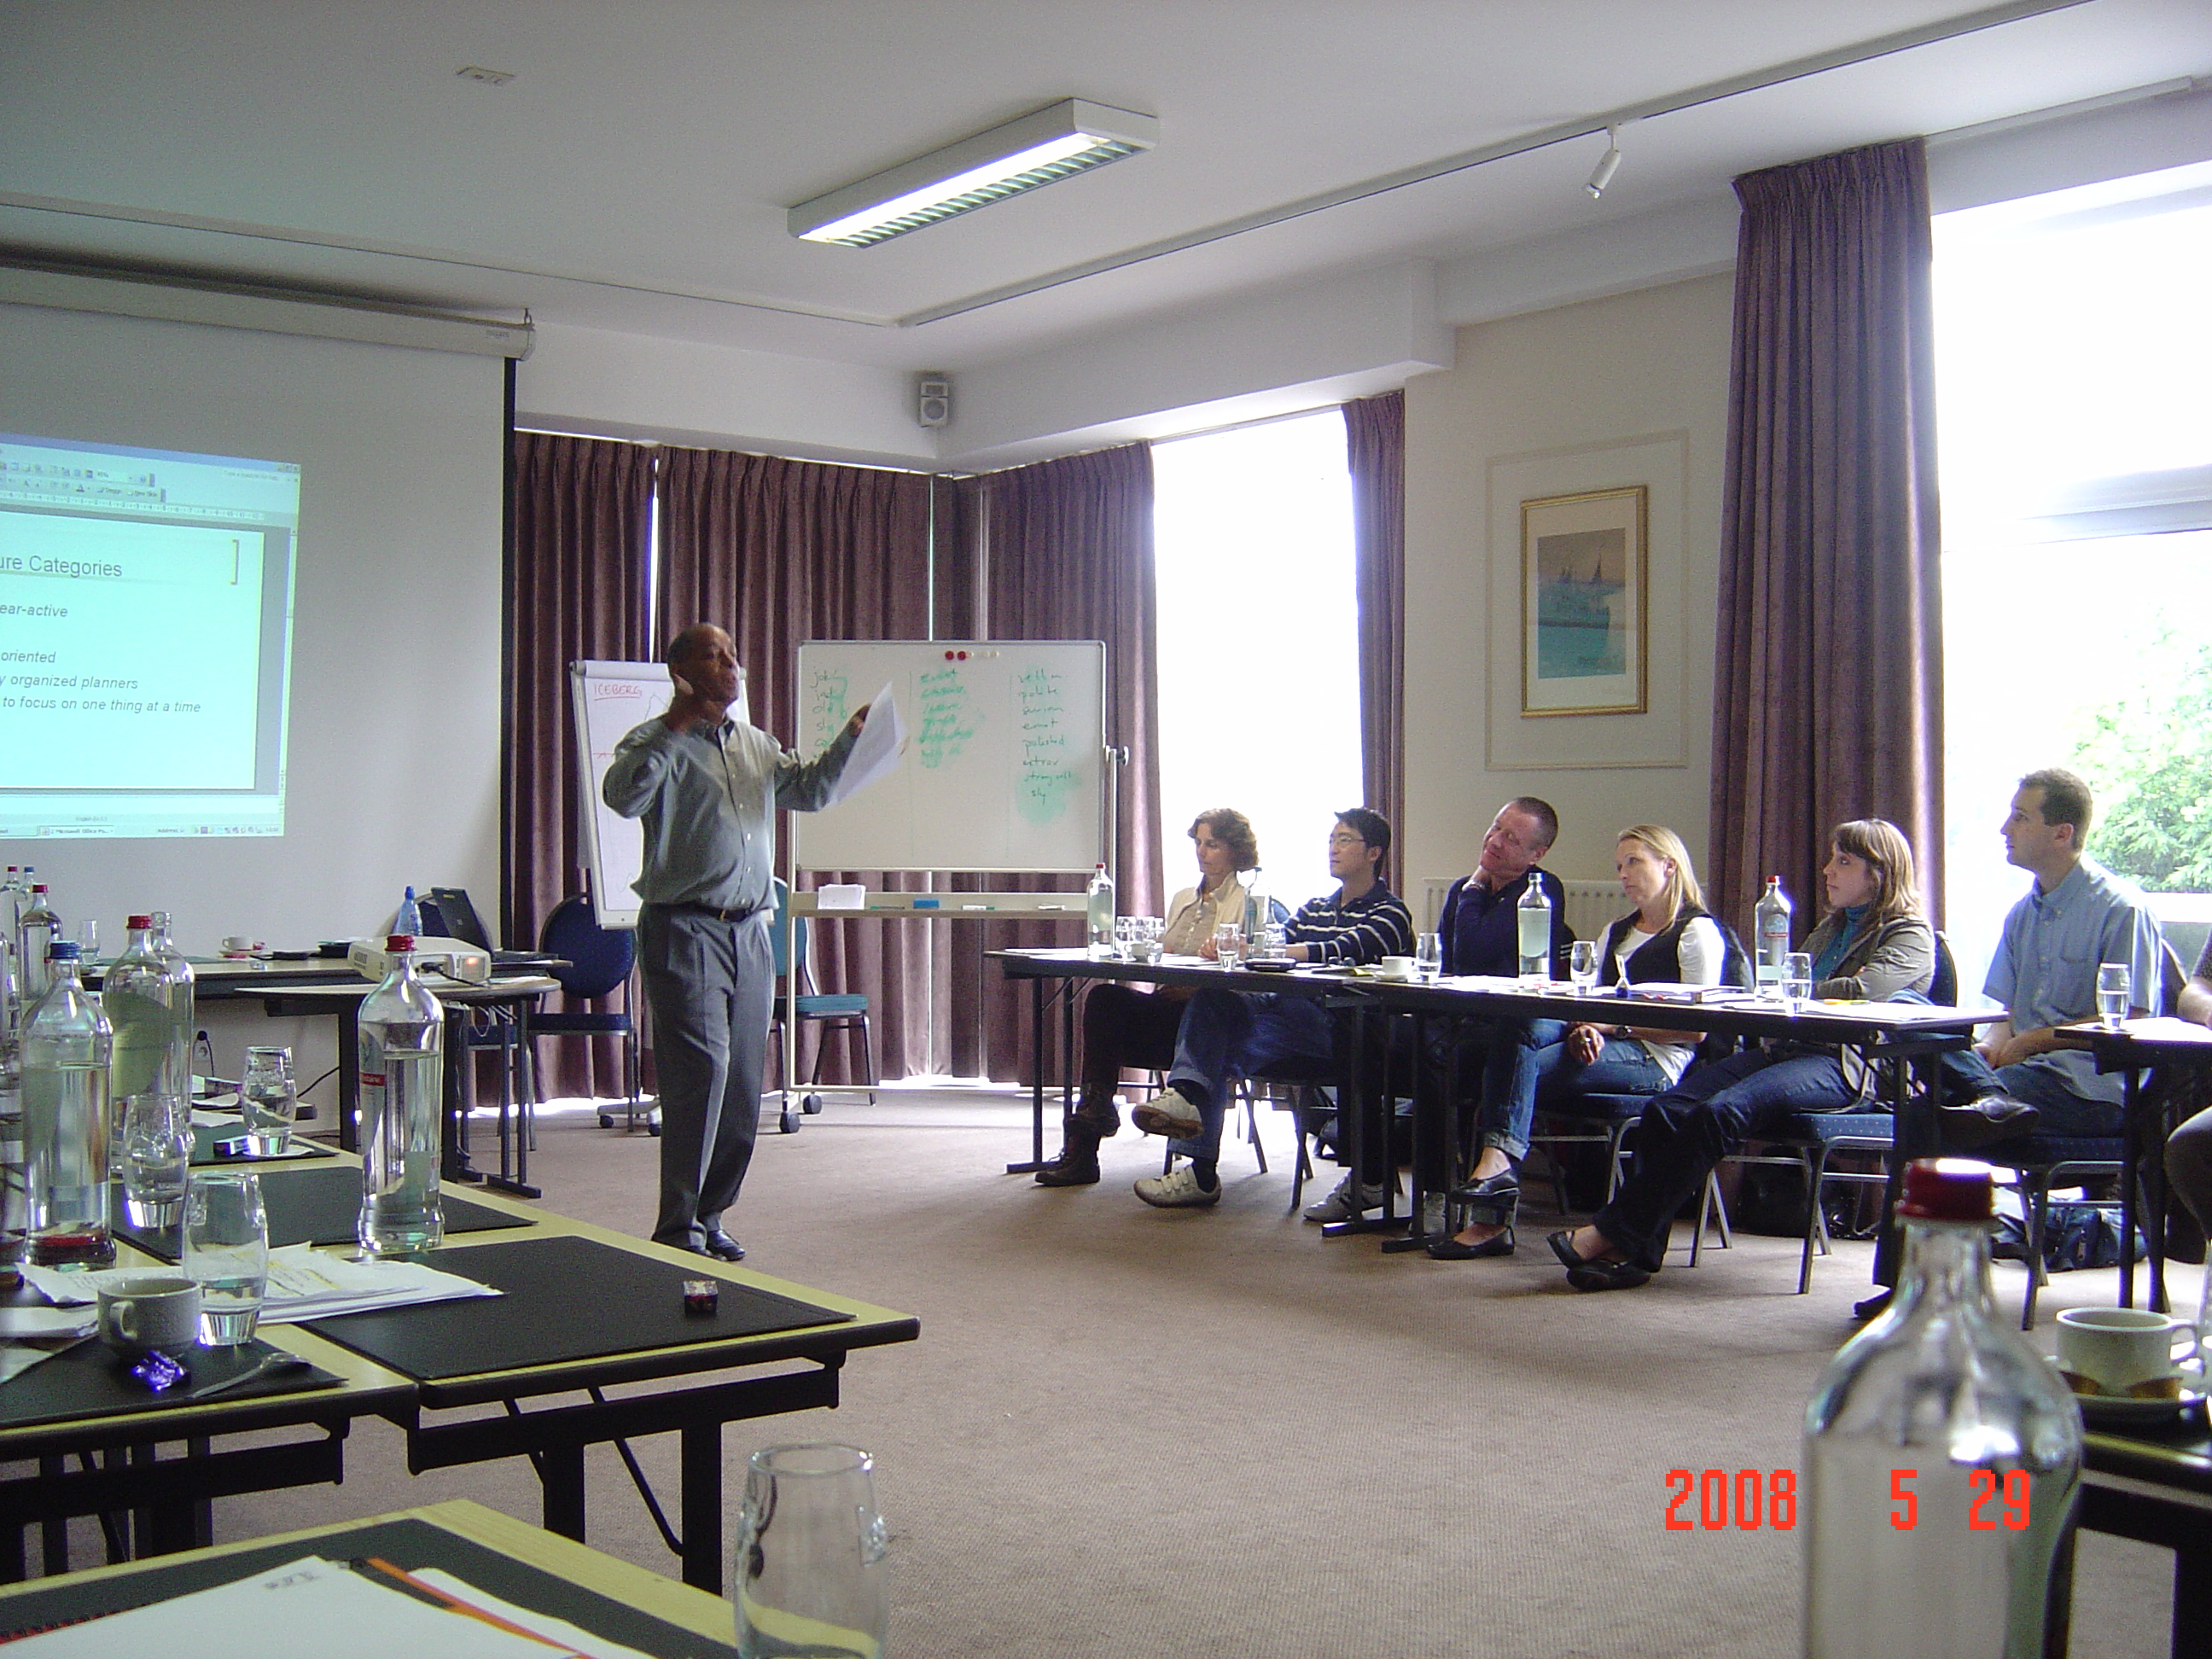 Picture of a cross cultural training session conducted in De Panne (La Panne), Belgium